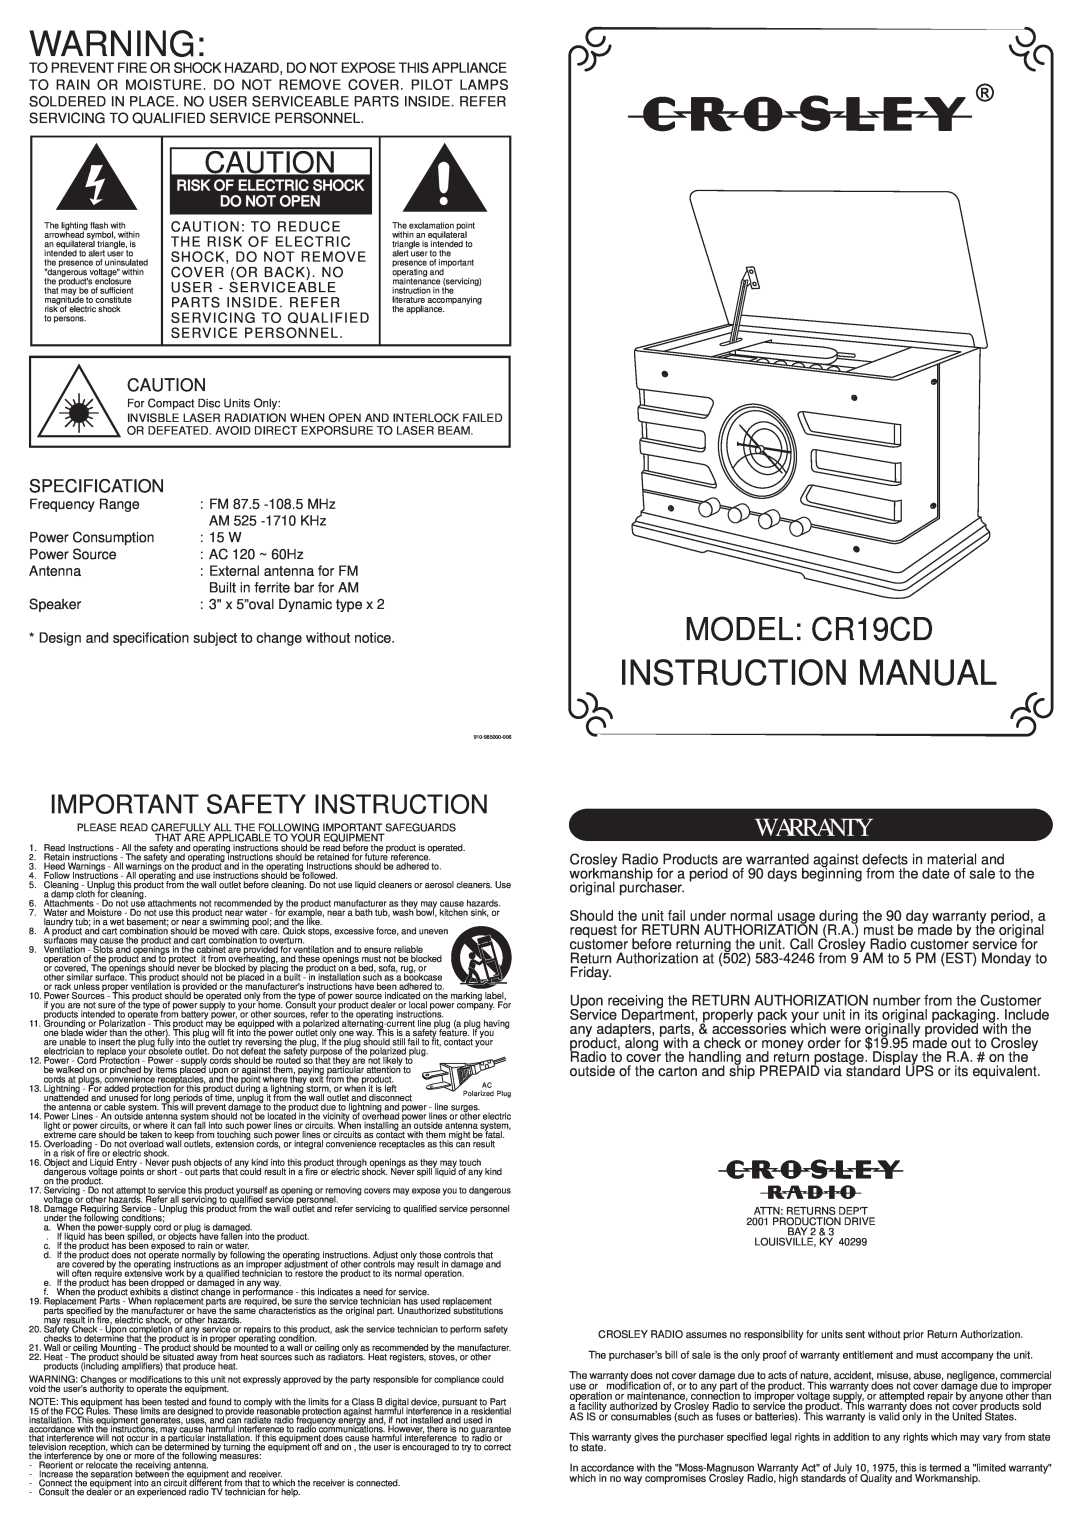 Crosley CR19CD Radio warranty MODEL CR19CD, Important Safety Instruction, Warranty, Specification 